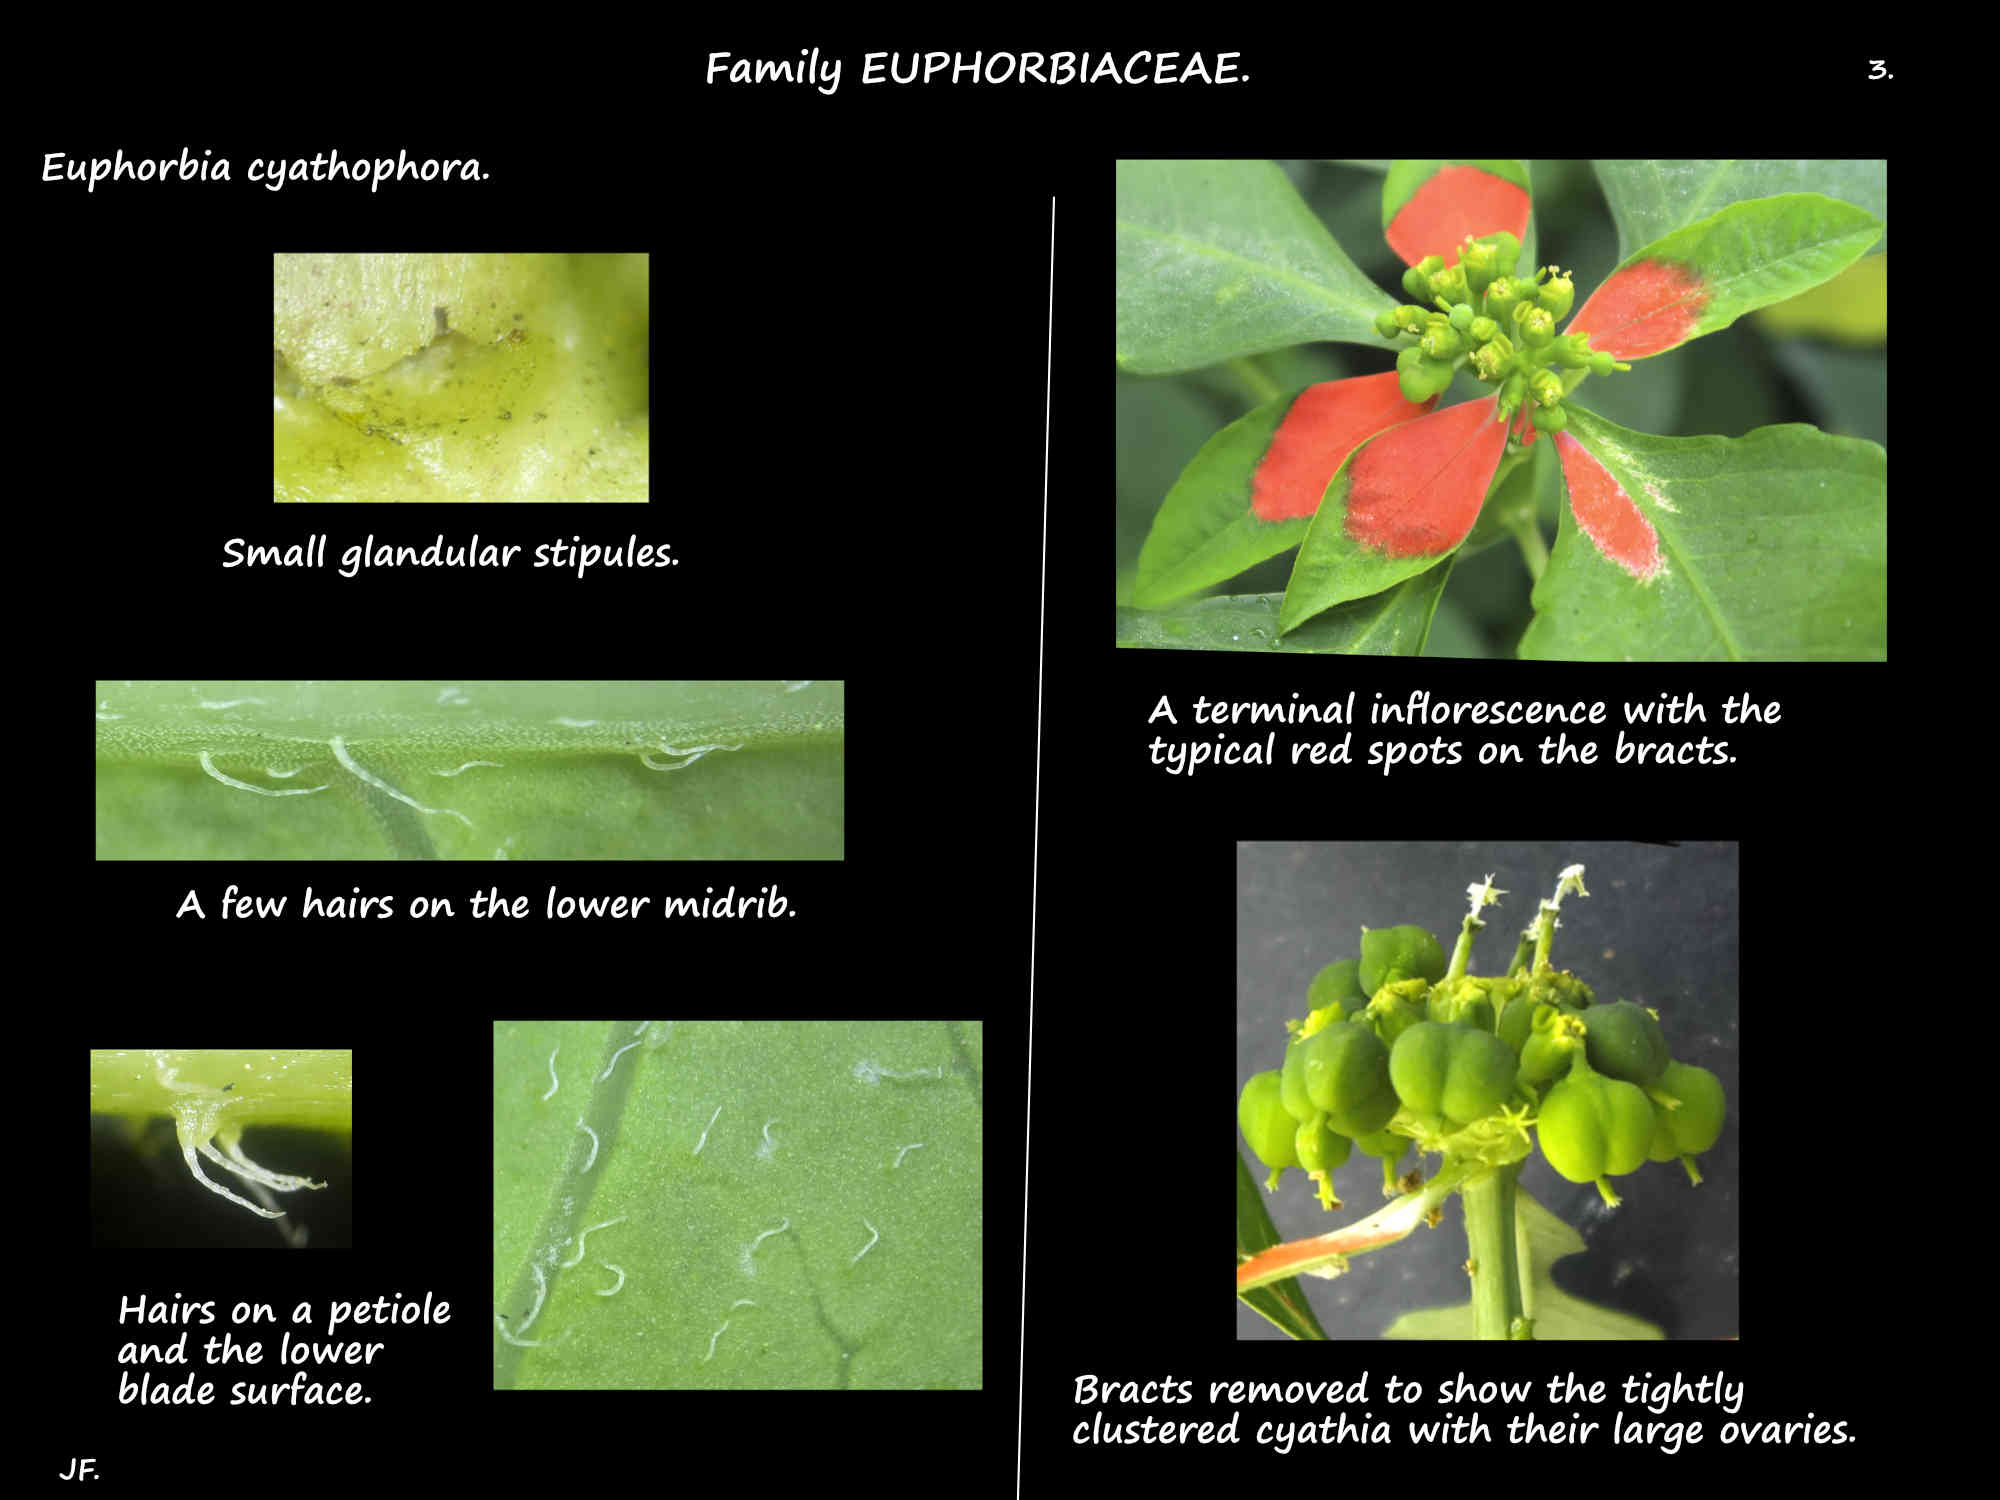 3 Euphorbia cyathophora stipules, leaf hairs & terminal inflorescences